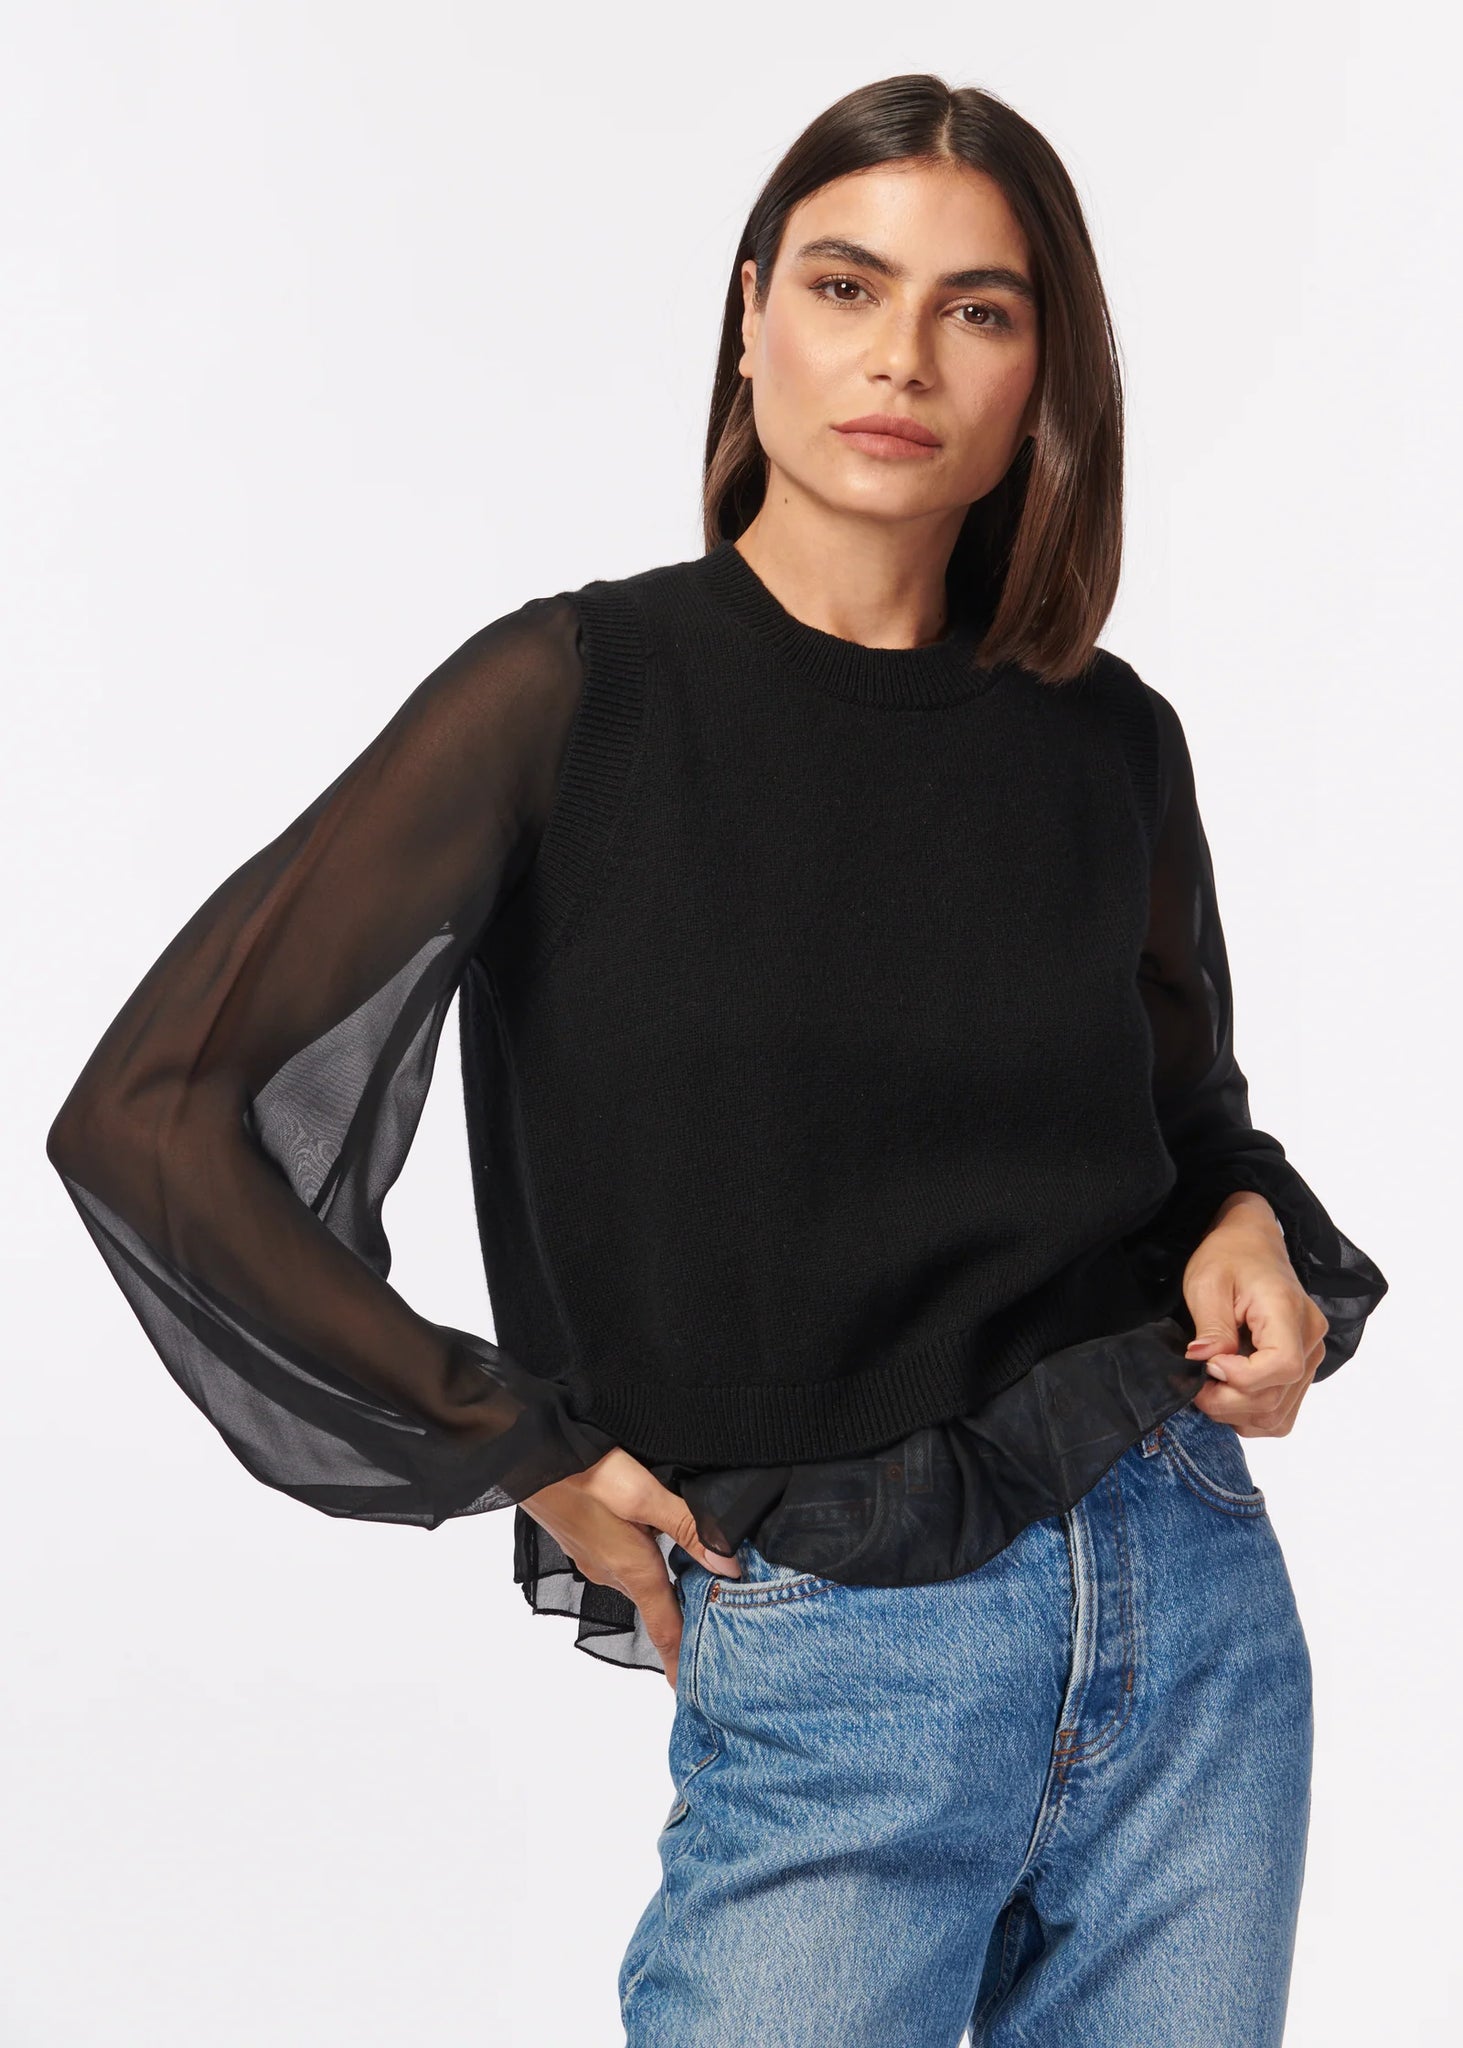 Cami NYC Meli Sweater - Black